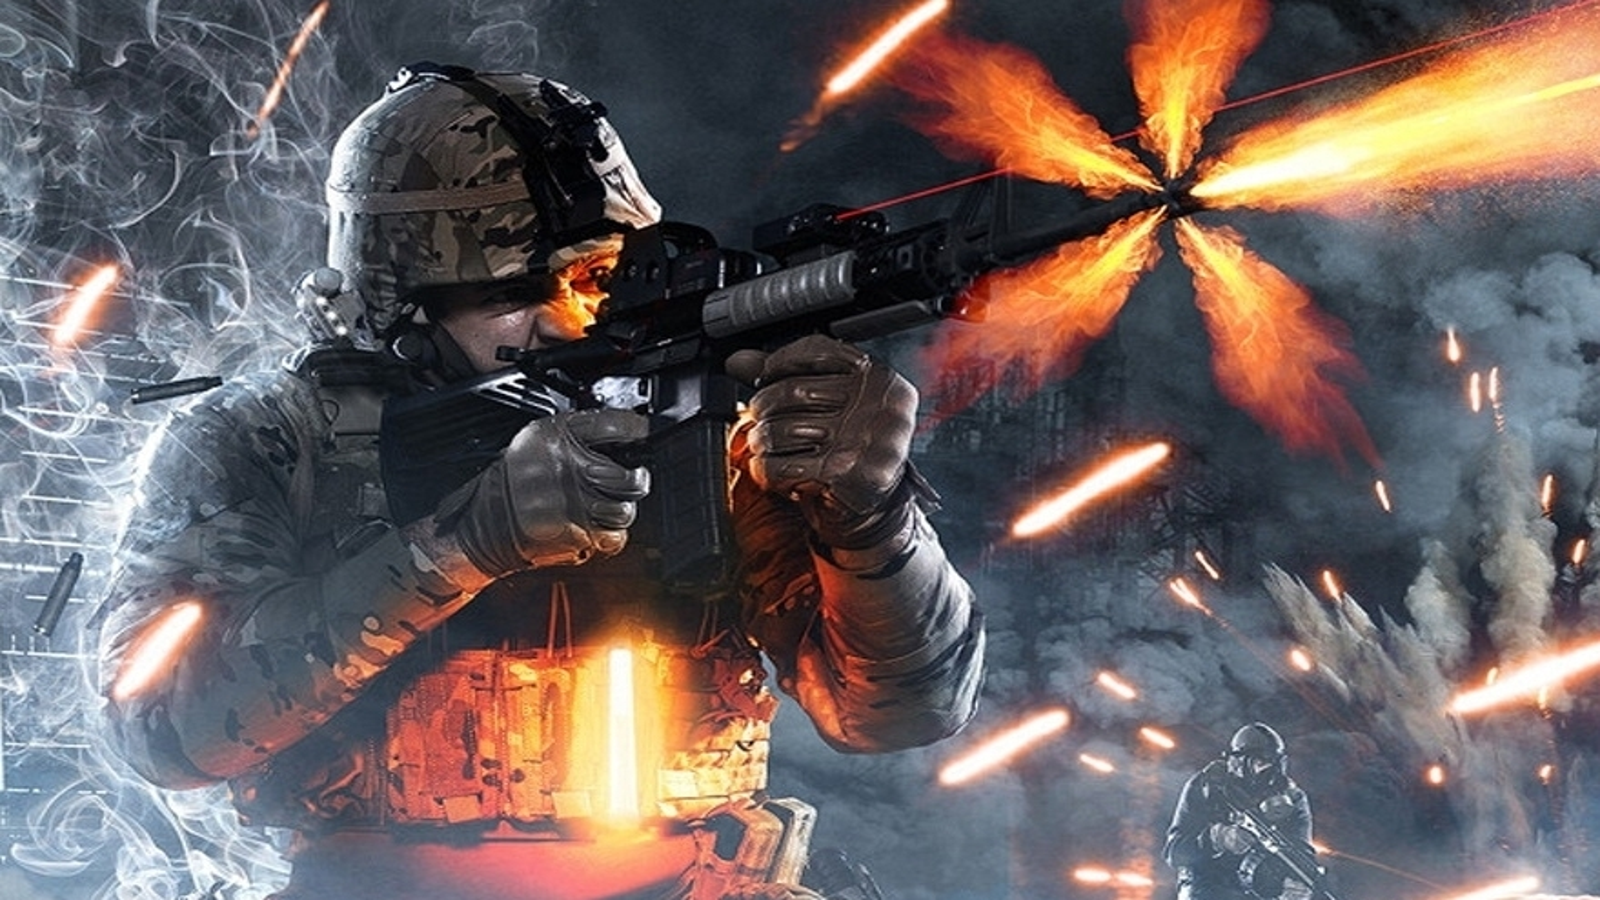 Battlefield 4 - multiplayer rocks, campaign sucks!